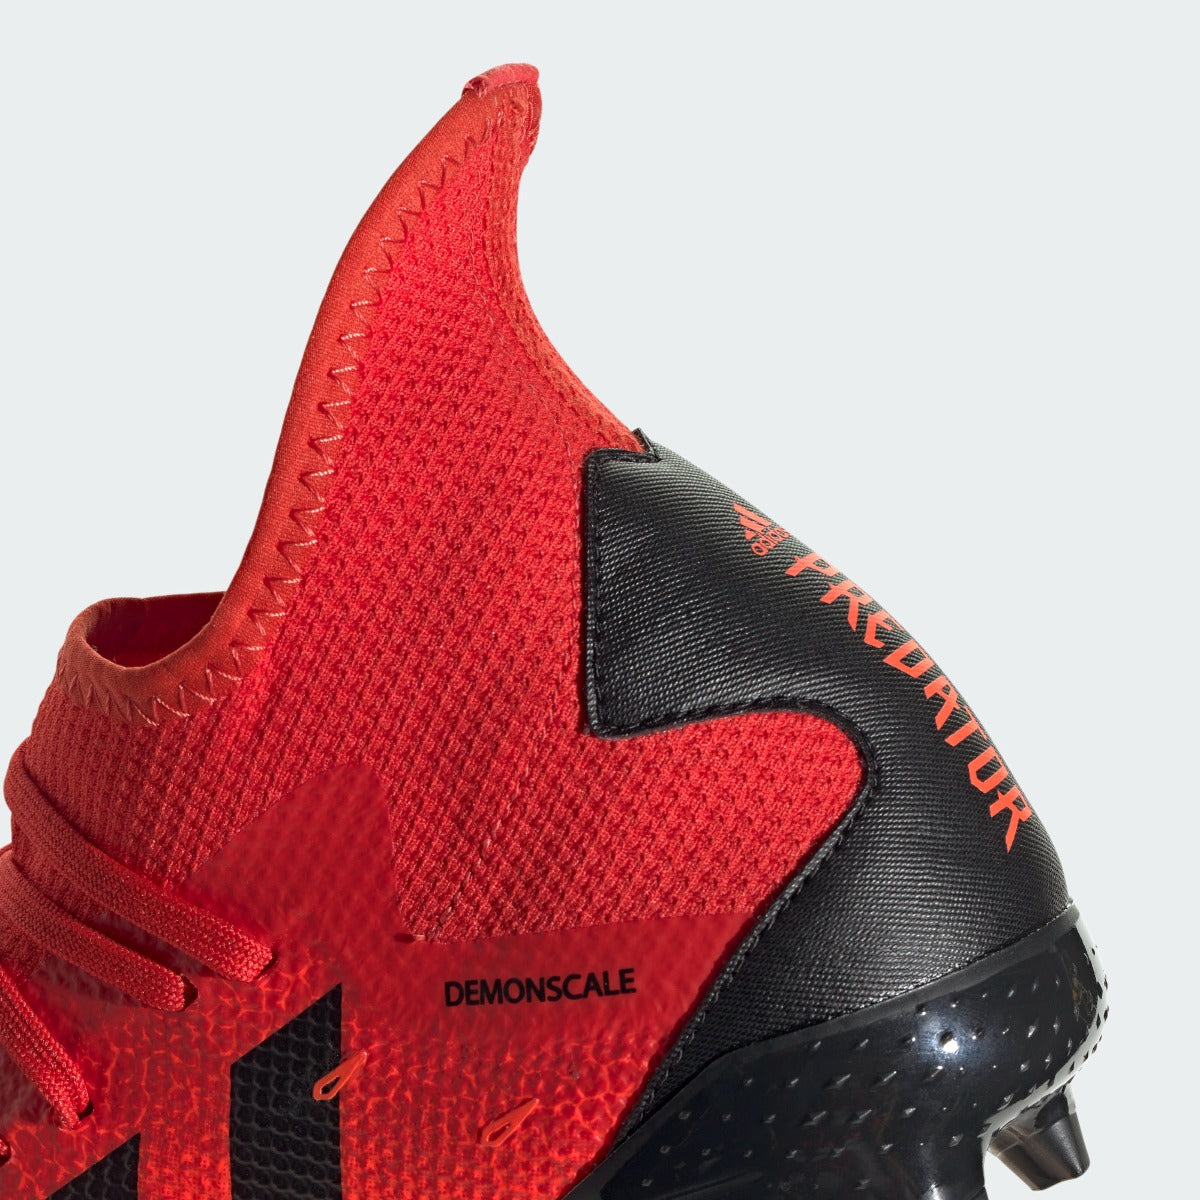 Adidas Predator Freak .3 FG - Red-Black (Detail 2)